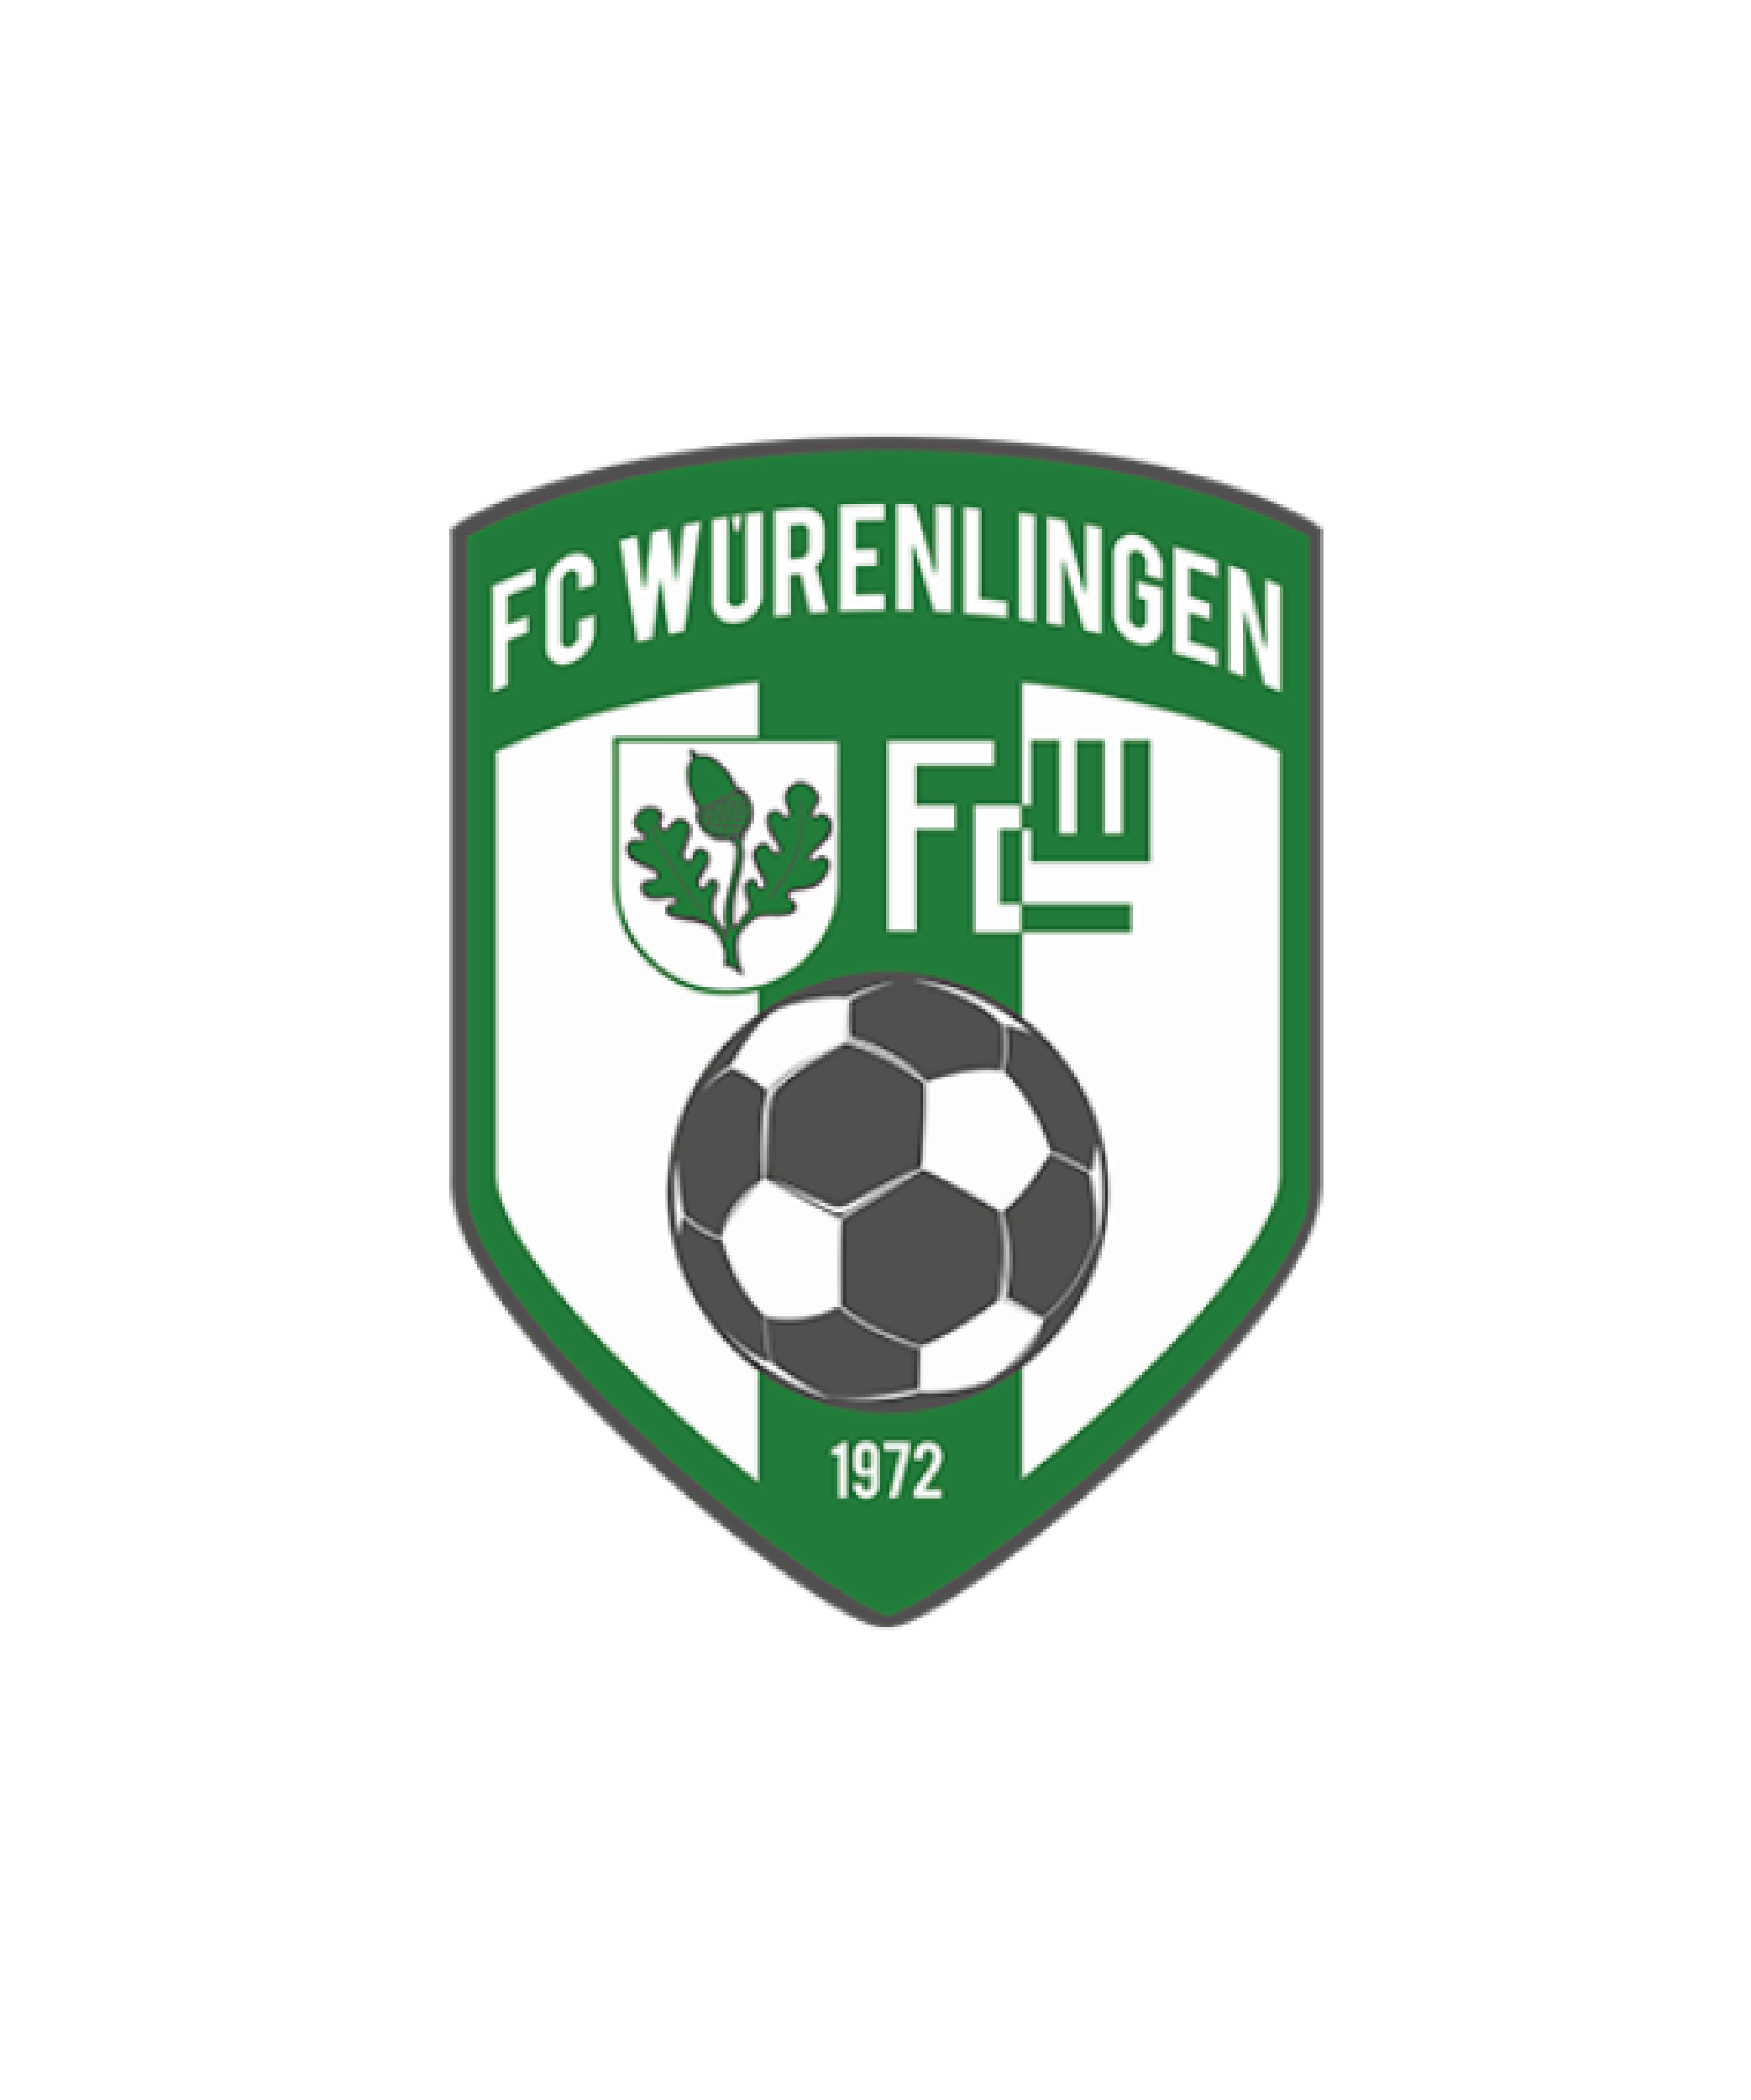 FC WURENLINGEN